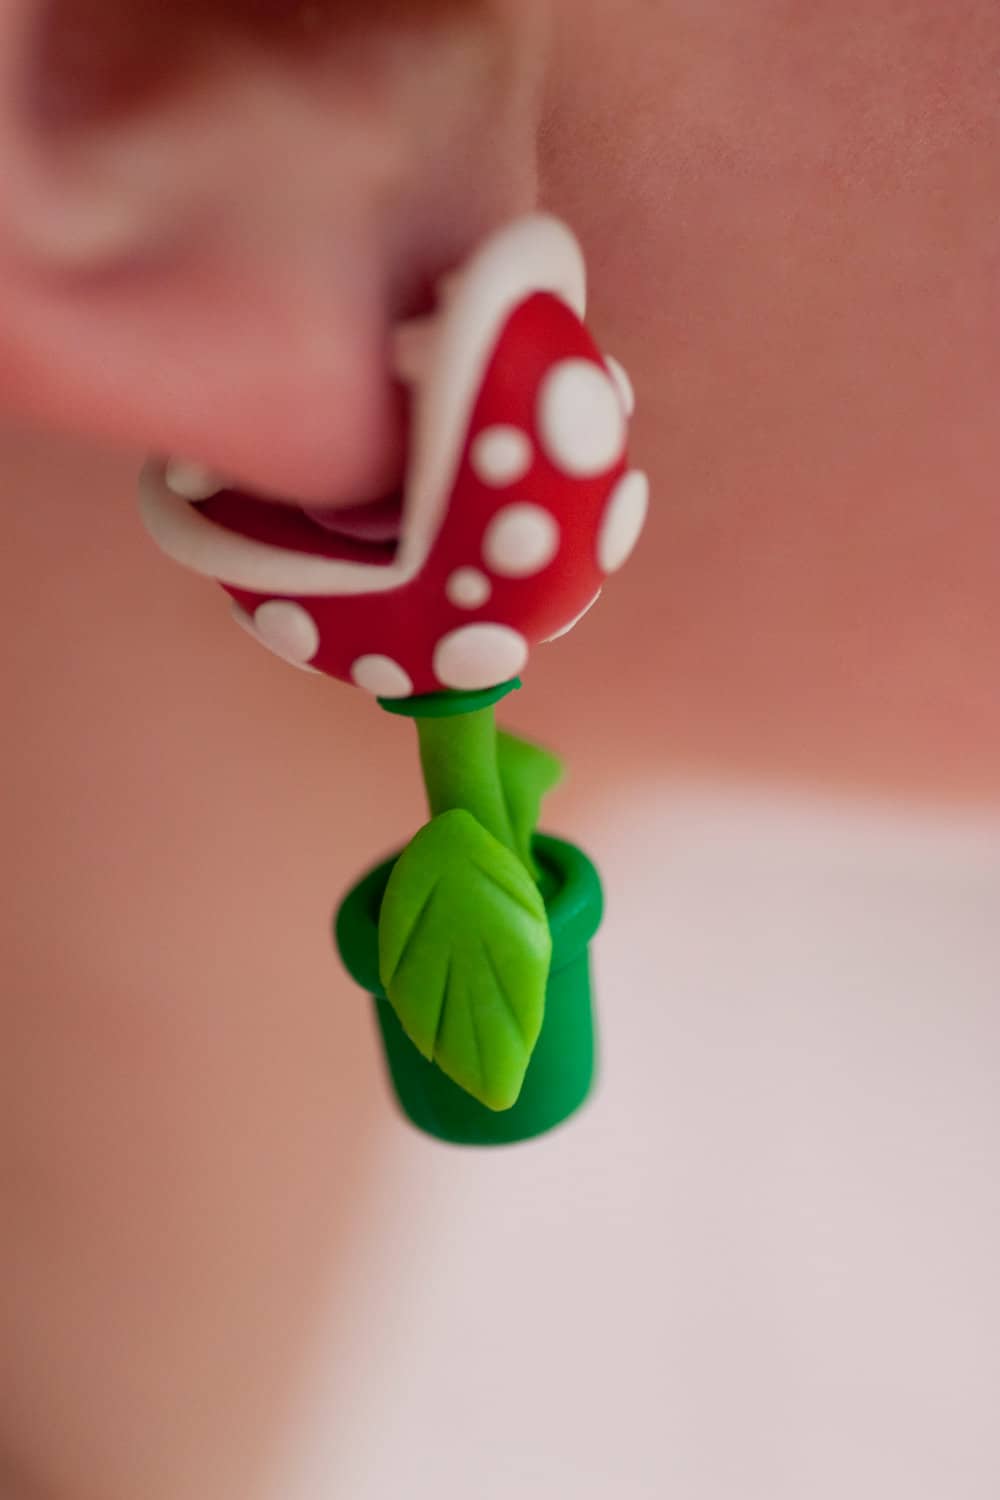 Super Mario Piranha Plant Earring: Brilliant Nerd Accessory